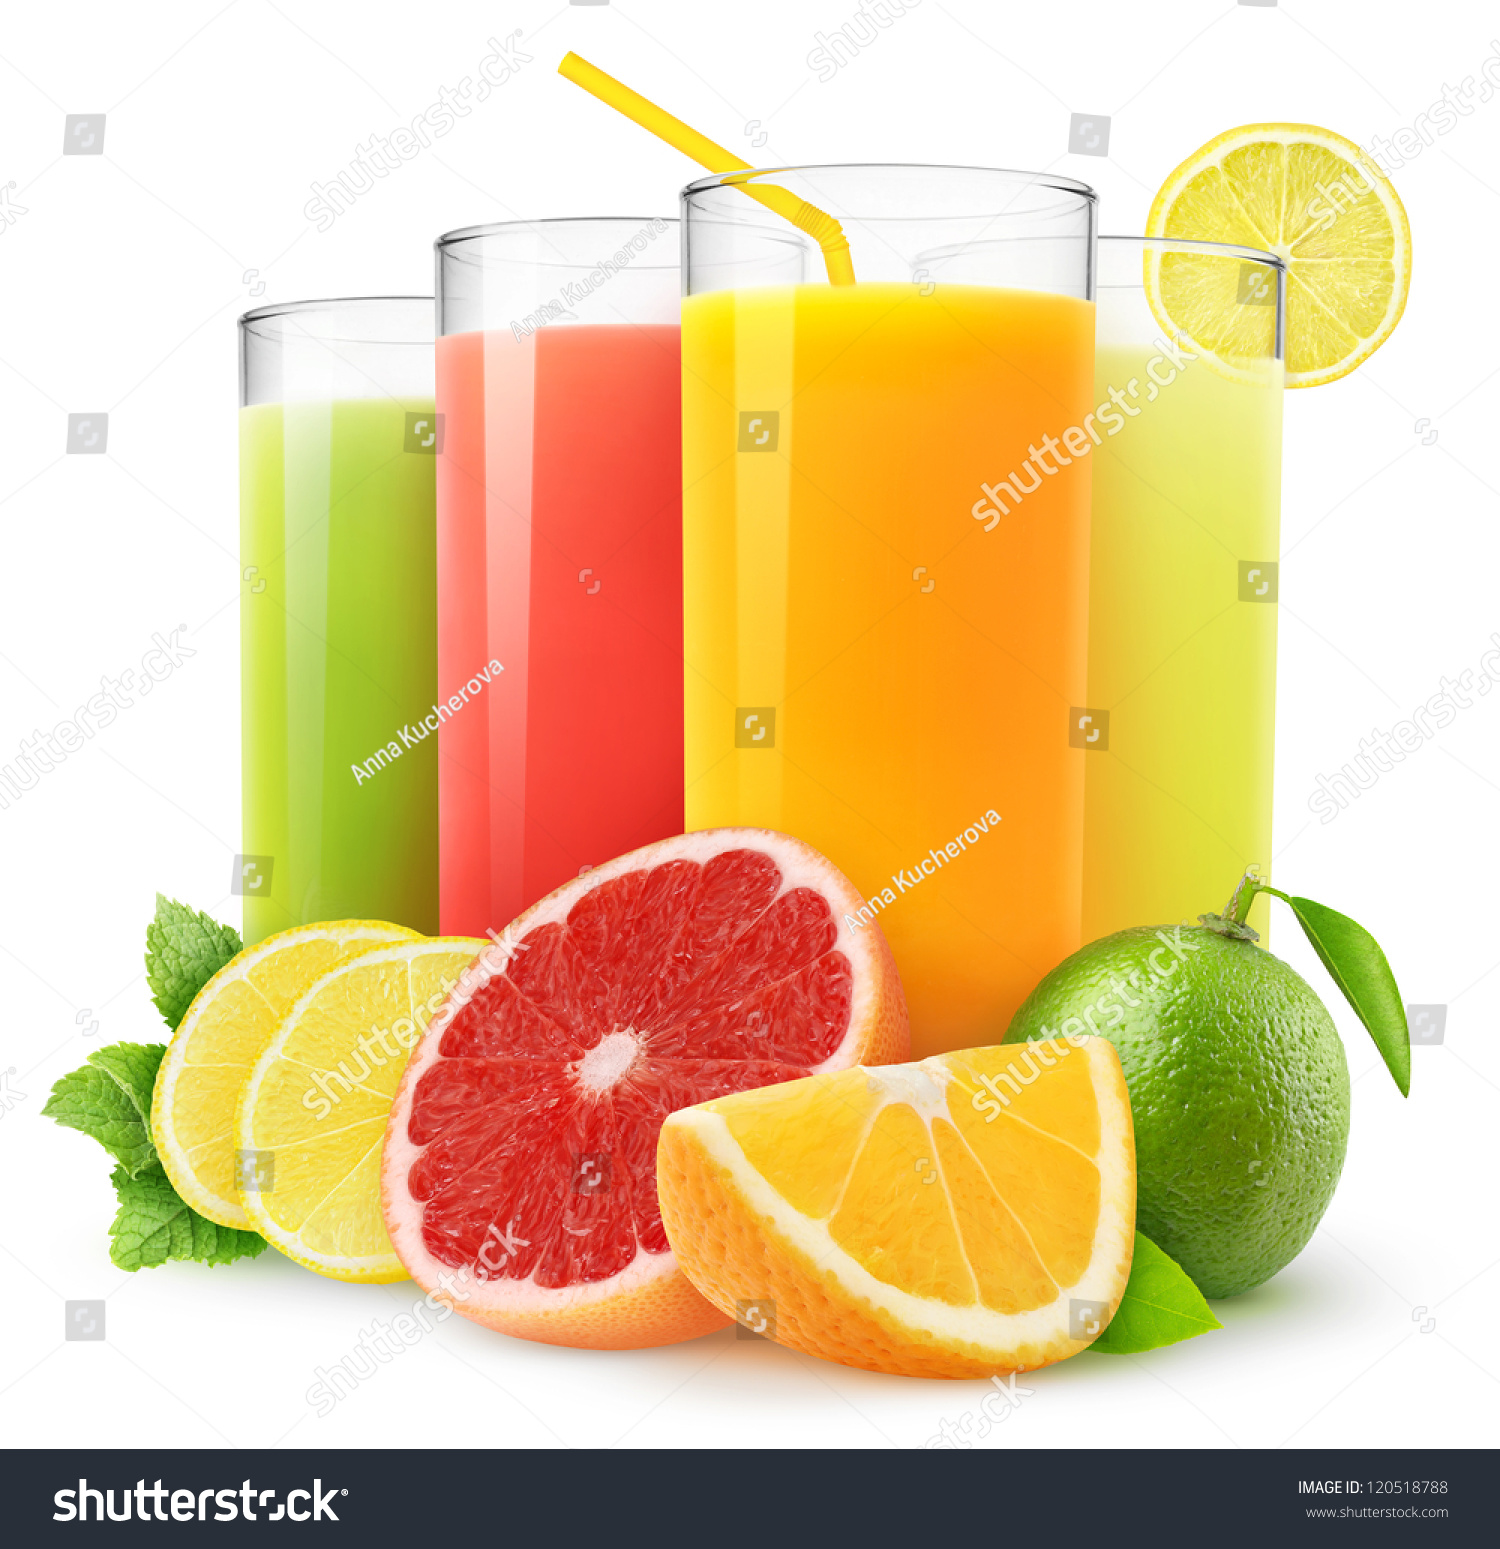 Isolated drinks. Glasses of fresh citrus juices (orange, grapefruit, lemon, lime) and cut fruits isolated on white background #120518788